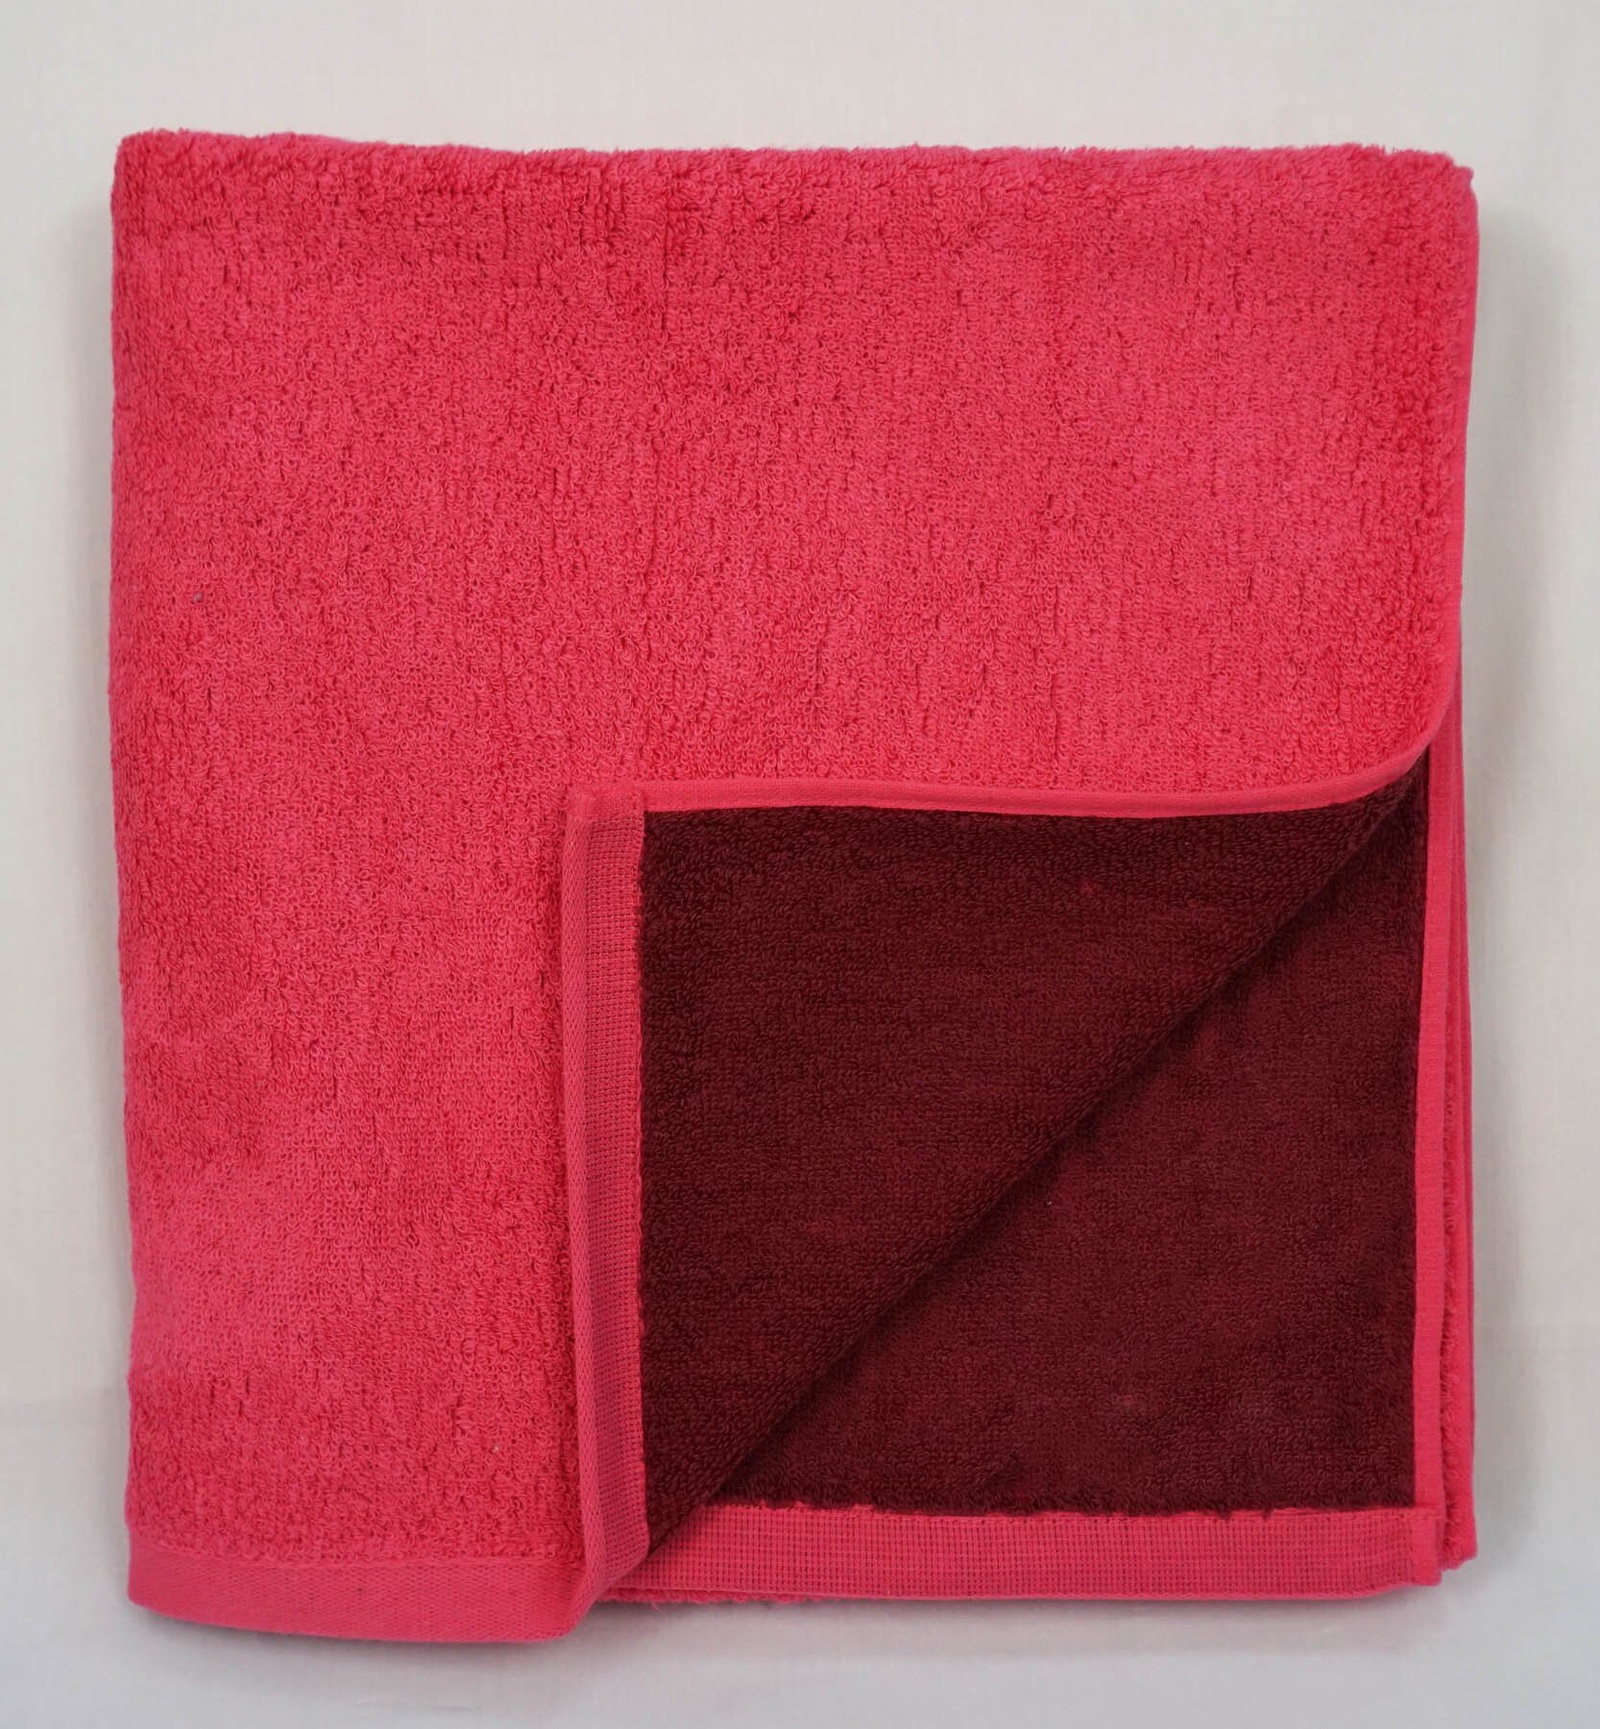 Полотенце банное Grand Stil Тон, размер 65*135, N 14-239b, розовый